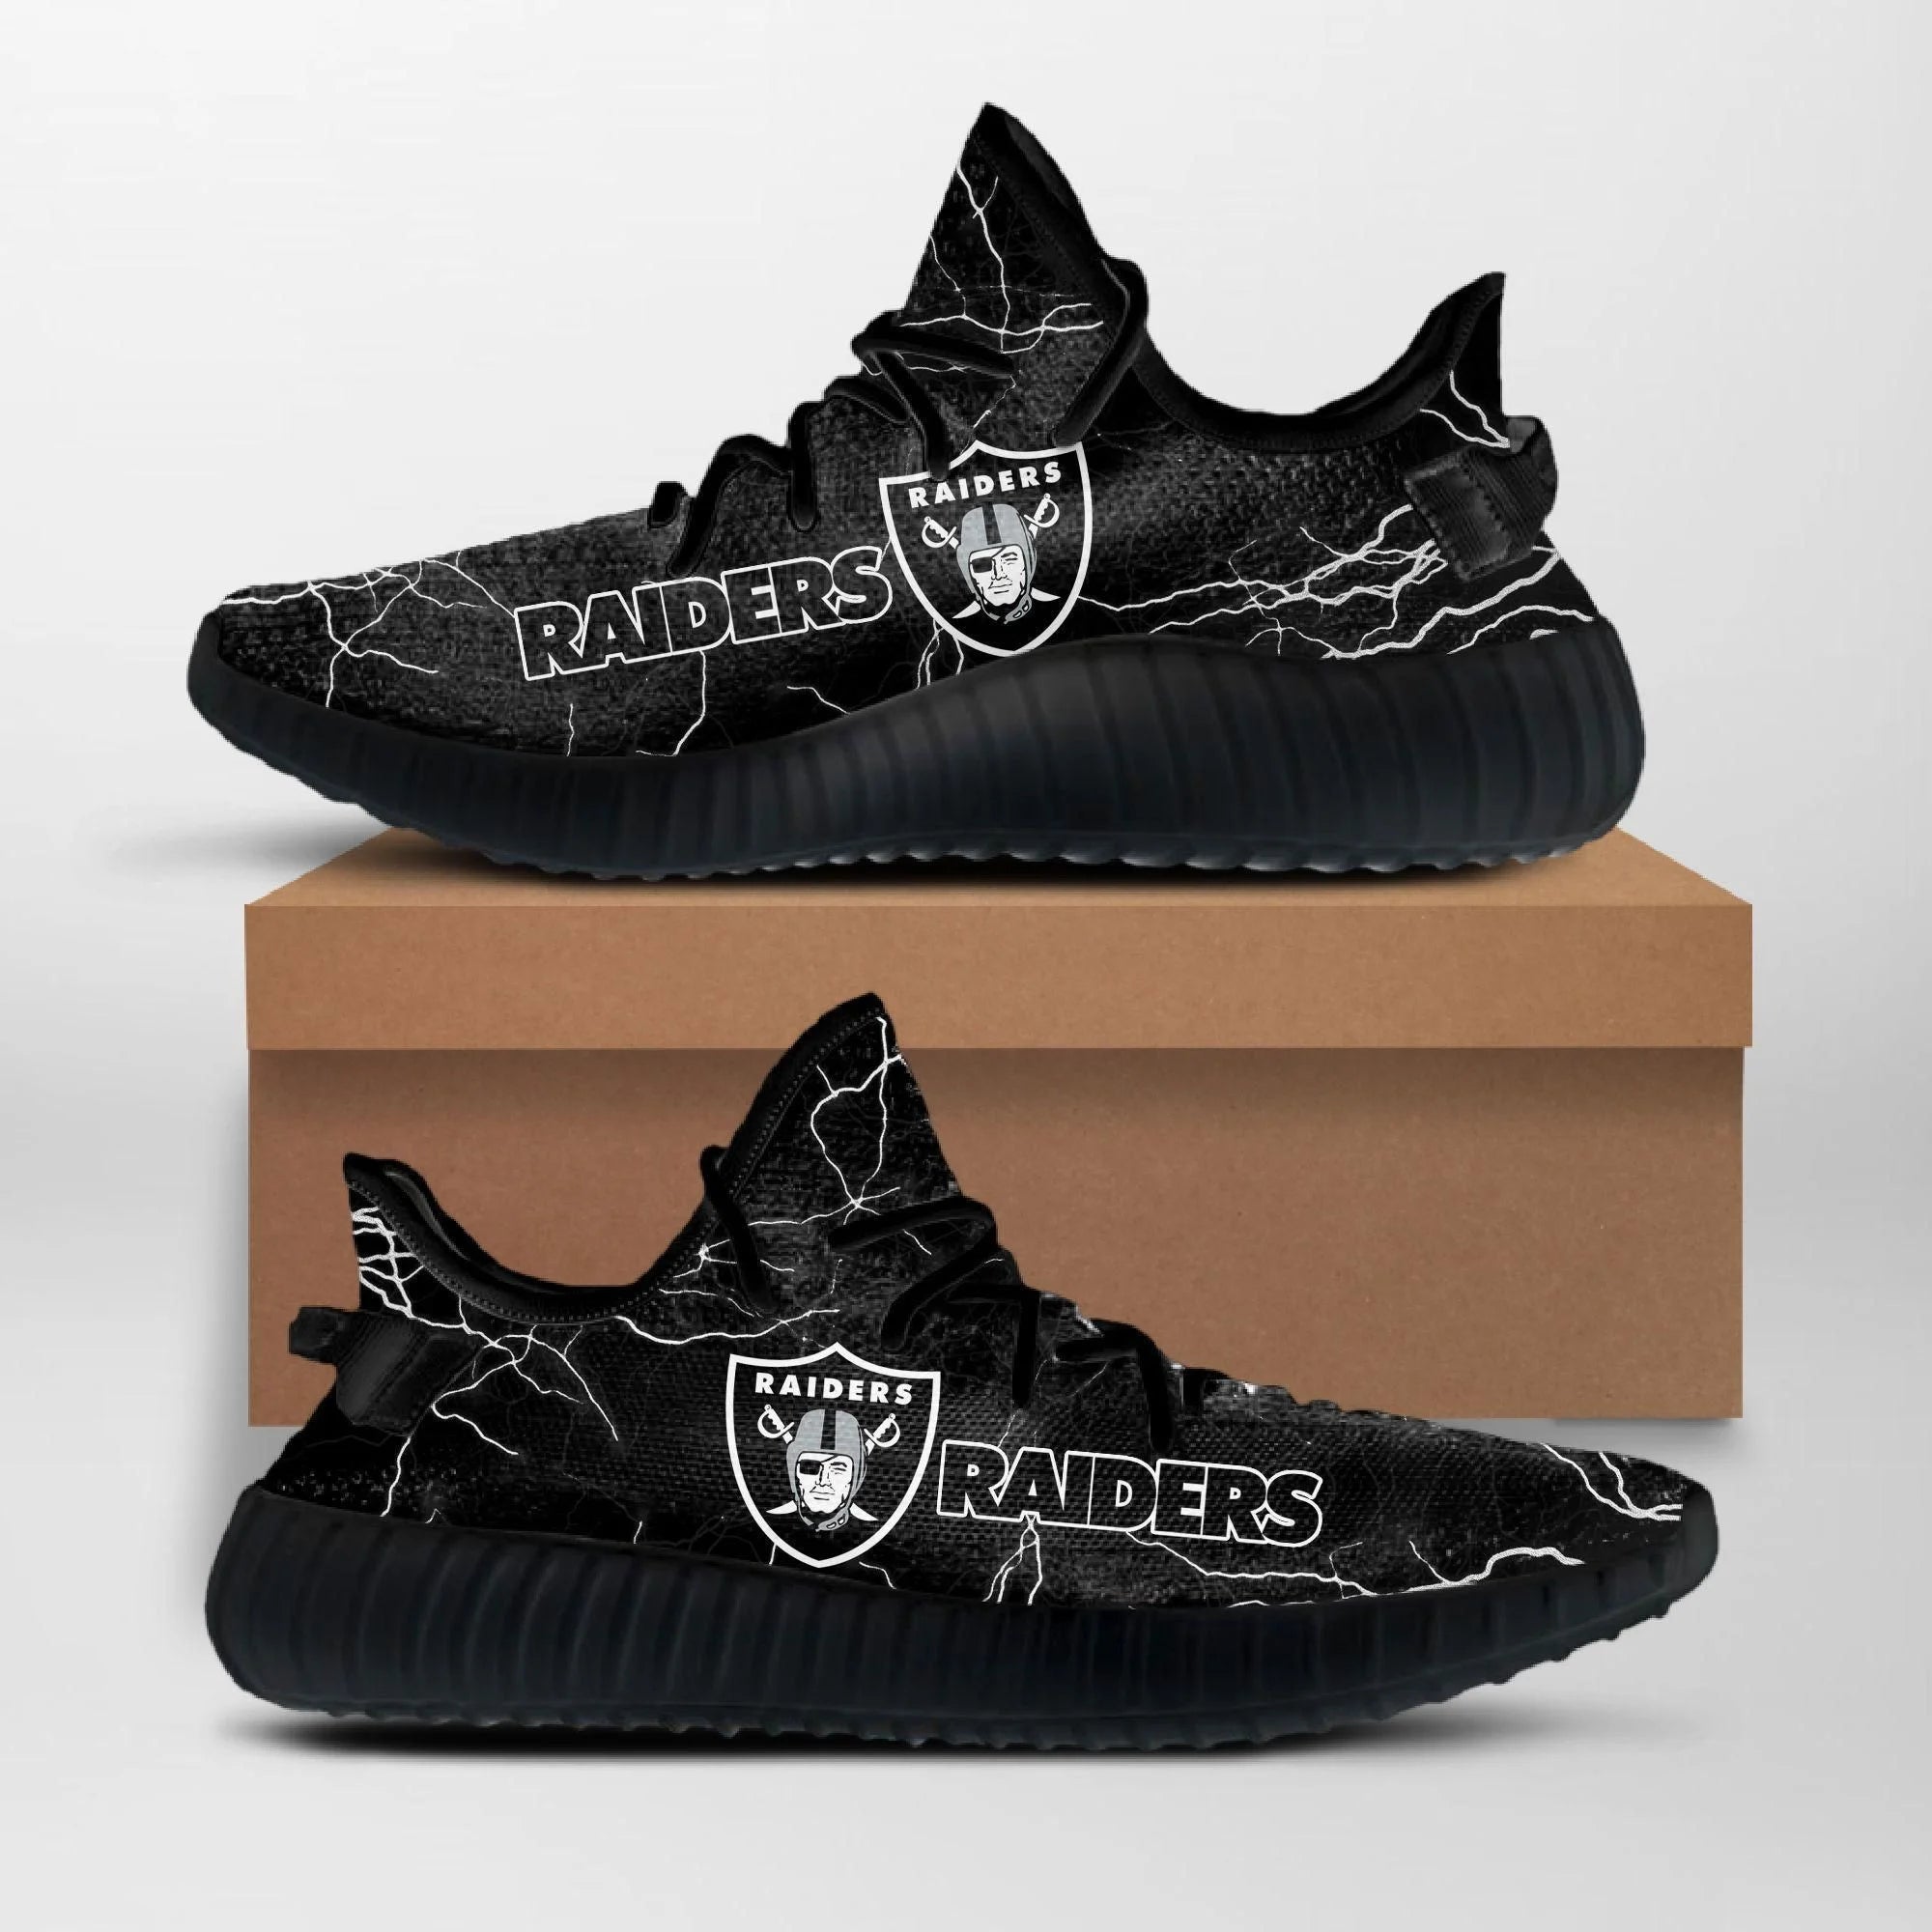 Buy Oakland Raiders NFL Custom Yeezy Shoes For Fans Yeezy Boost 350 V2 Top Trending Custom Shoes Gift